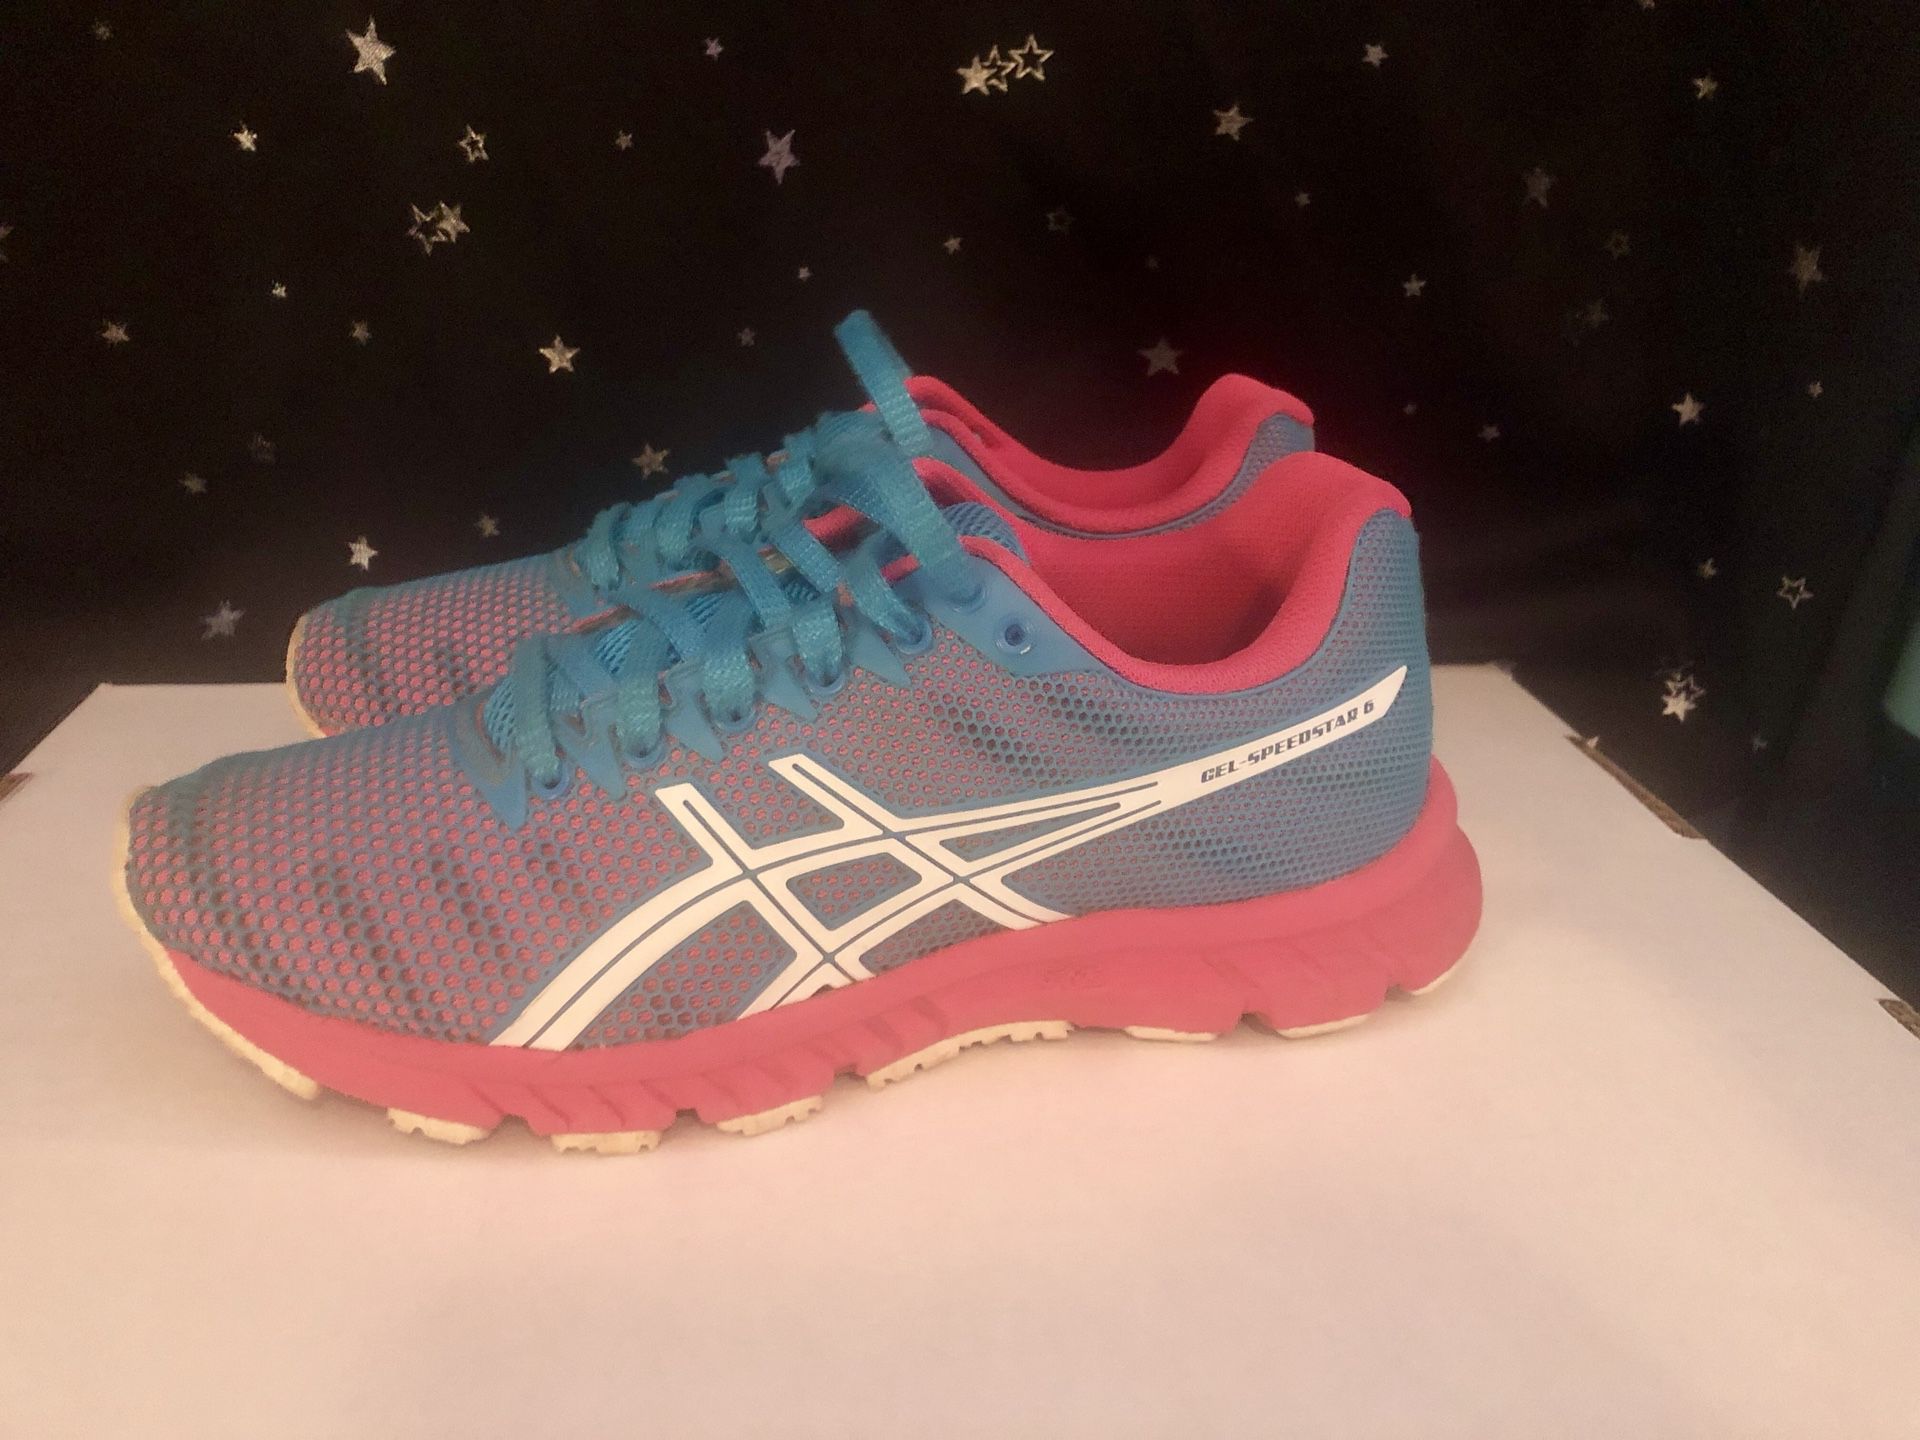 ASICS Gel Speedstar 6 Blue Pink Woman's Sneaker Shoes Size 5.5 for in San CA - OfferUp